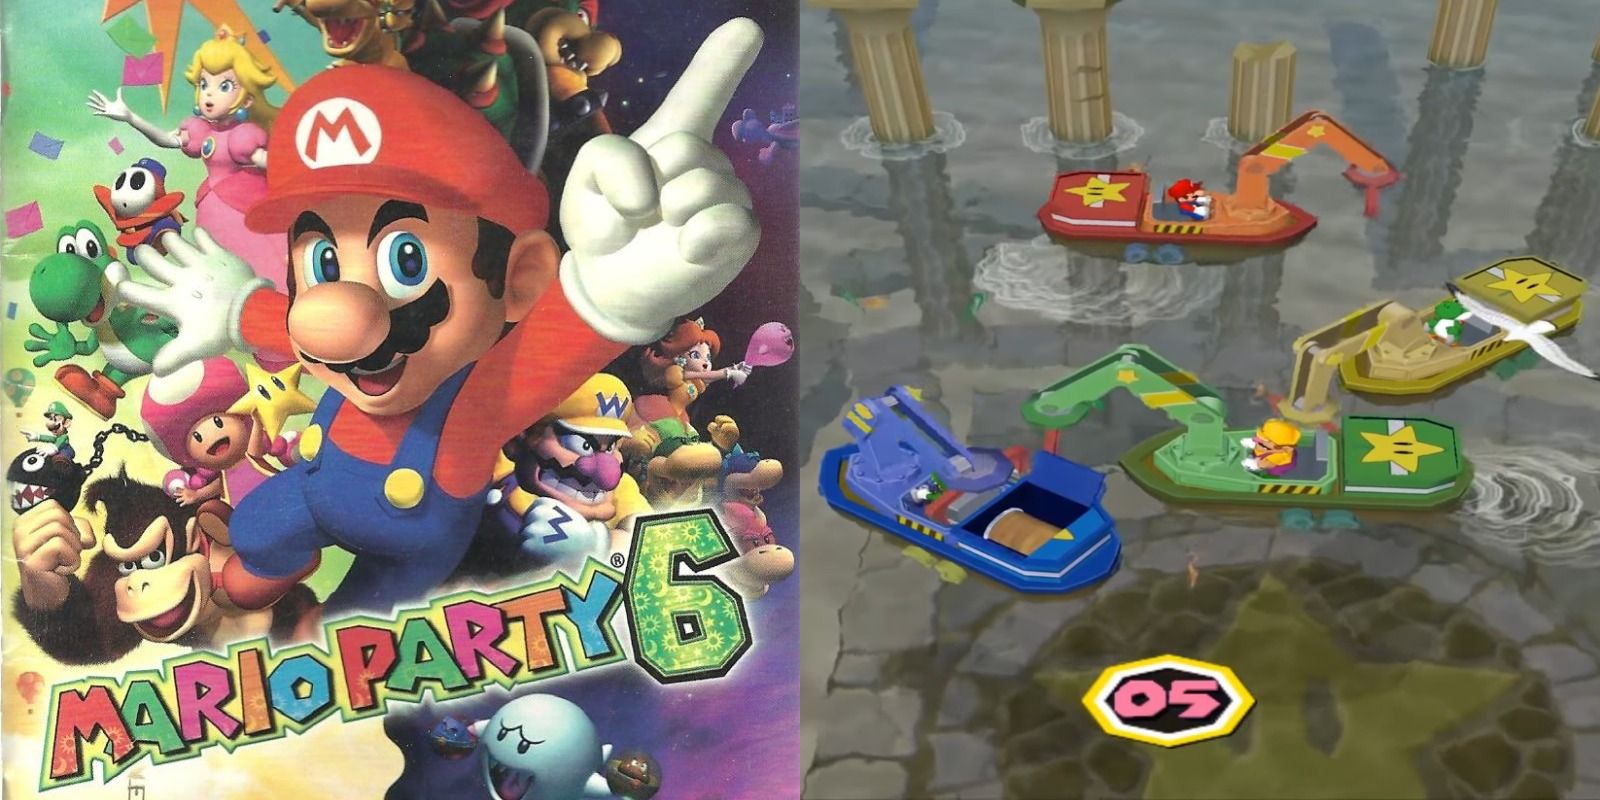 Mario Party 6 for the Nintendo GameCube